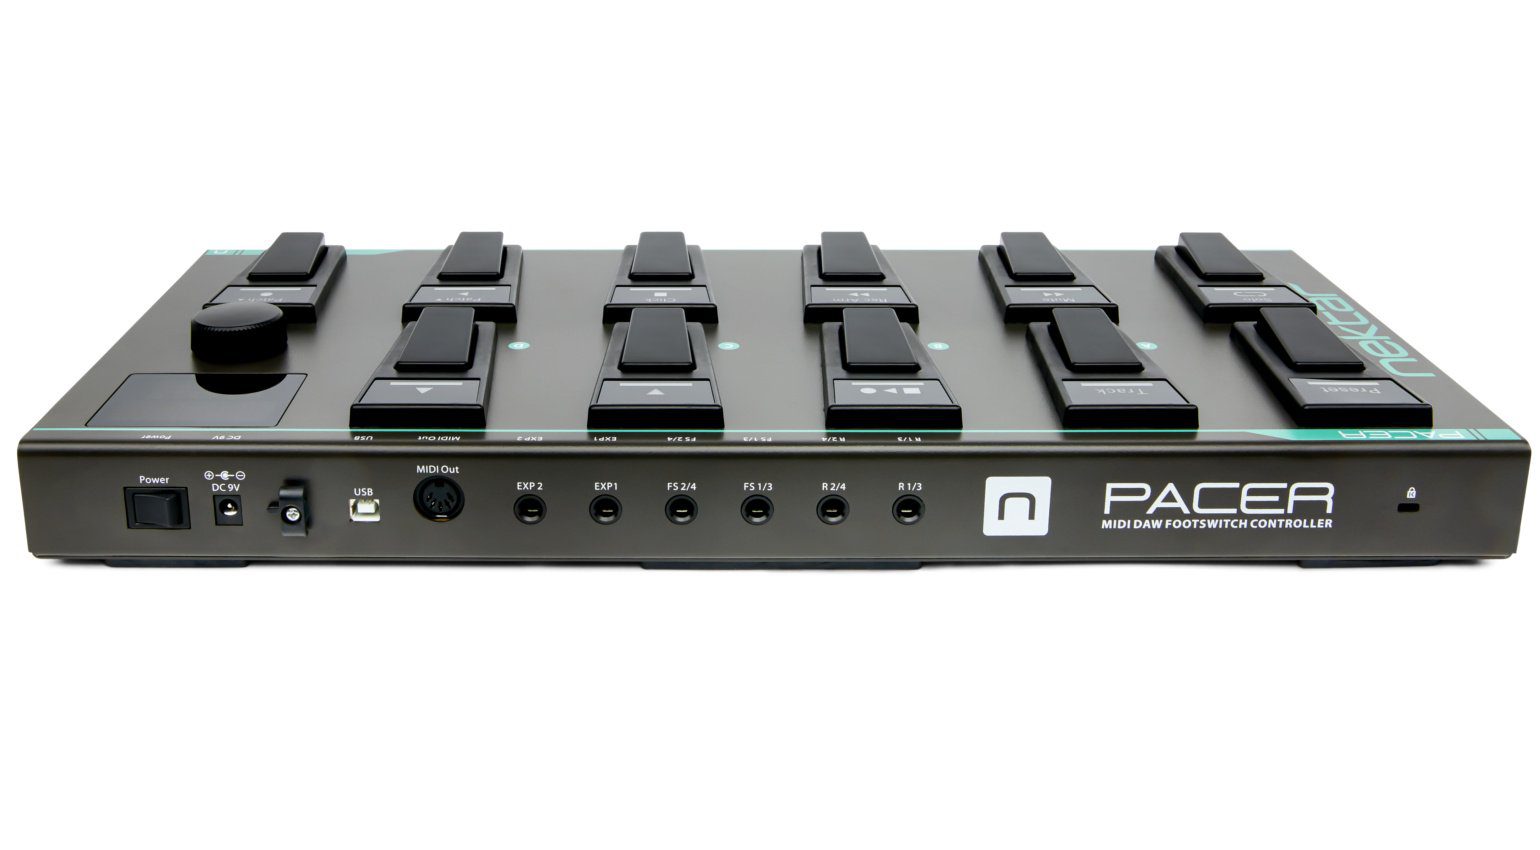 Nektar Pacer MIDI Footcontroller Back